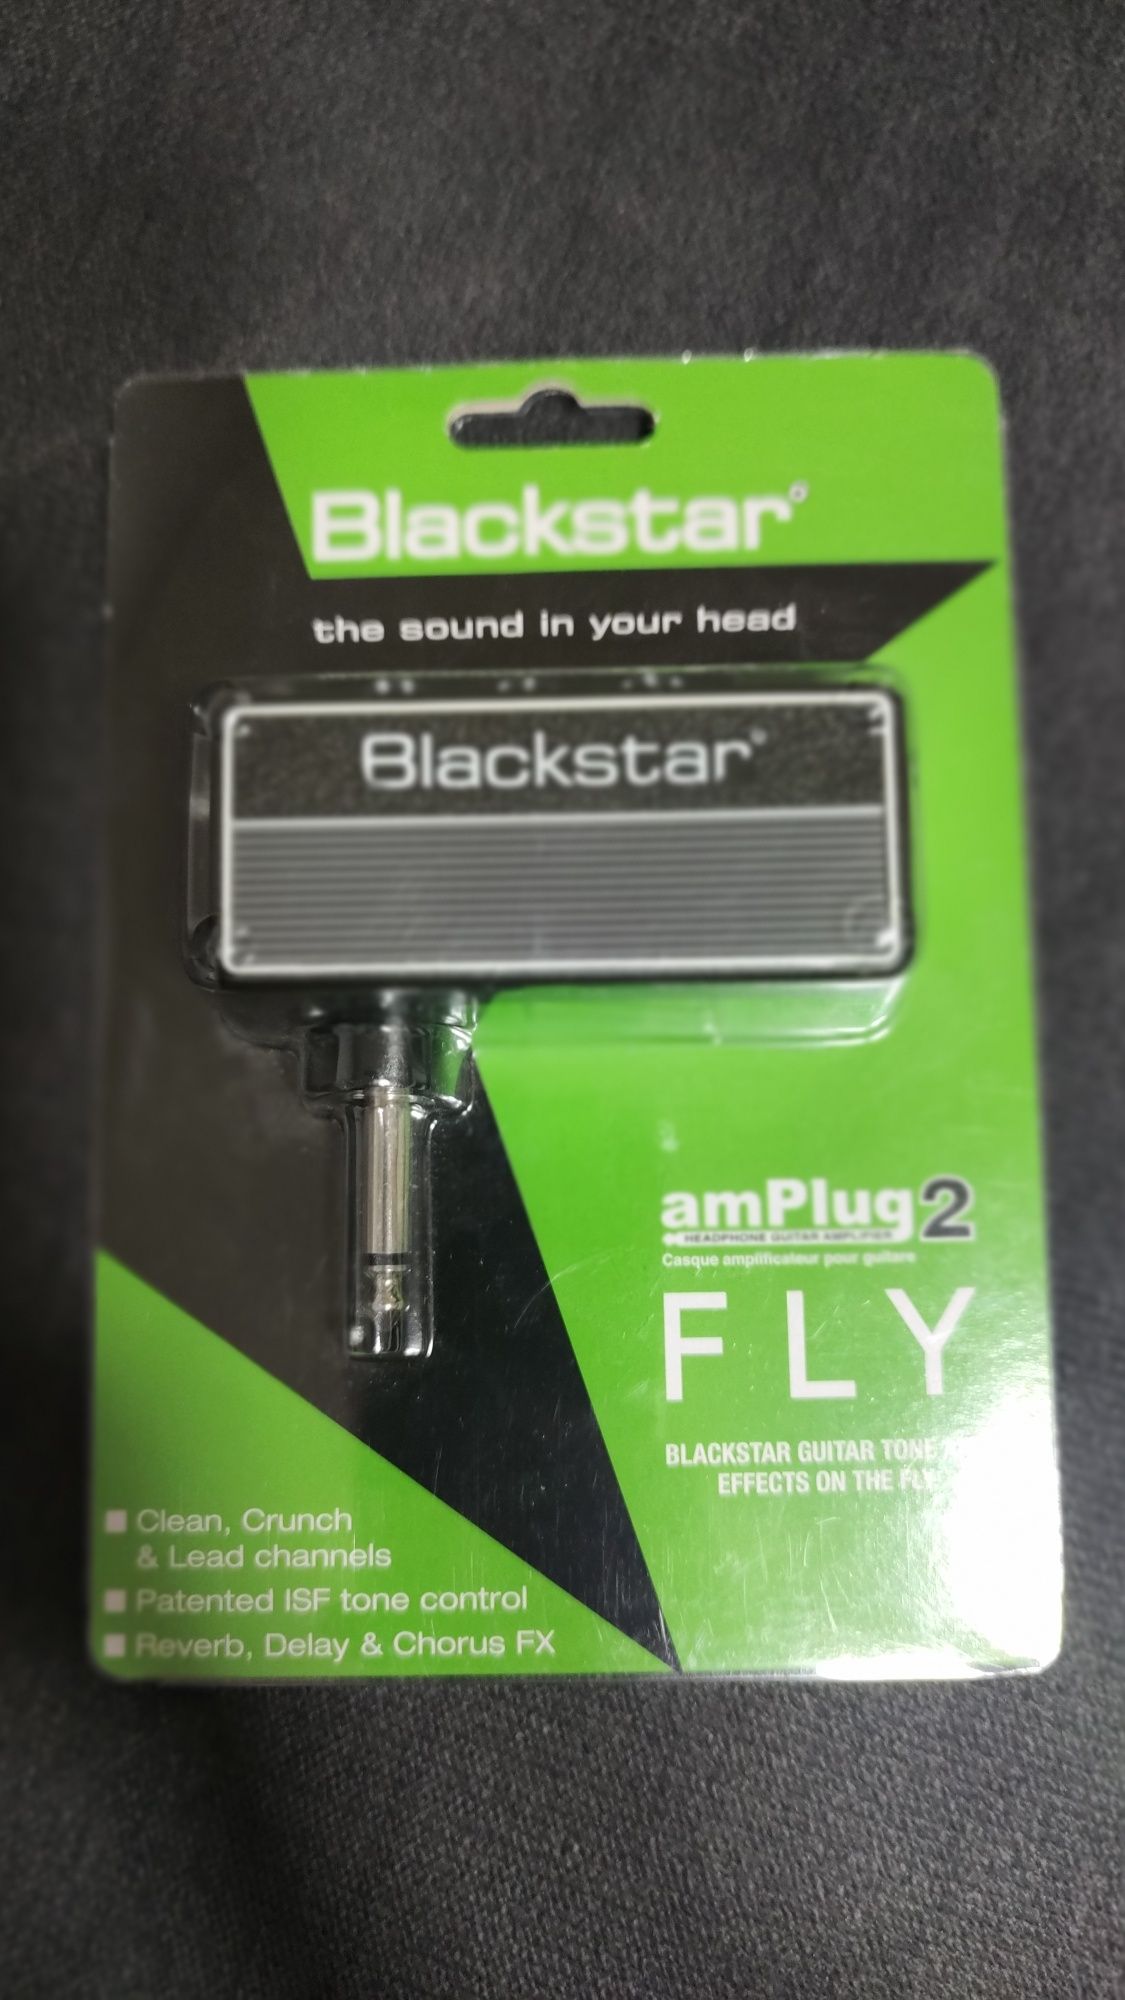 Blackstar amplug 2 fly